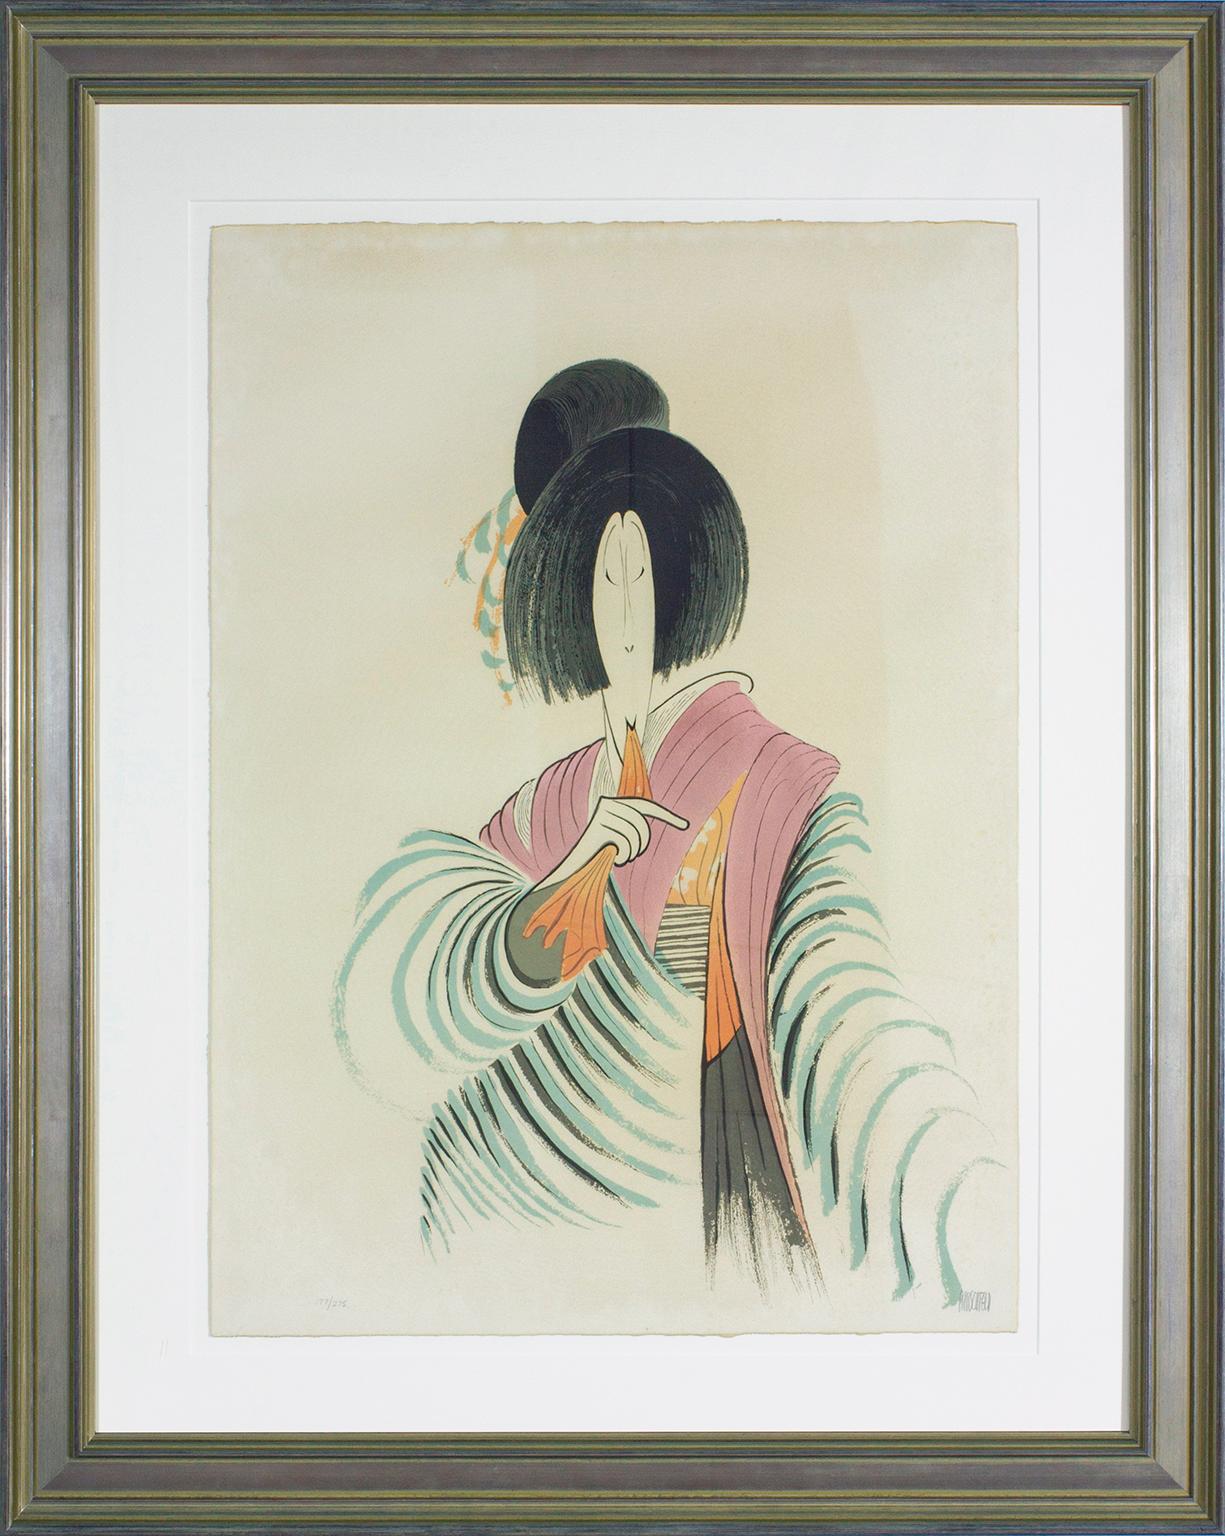 Albert Al Hirschfeld Figurative Print - "Kochiyama" framed, hand-signed lithograph from "Kabuki Suite" by Al Hirschfeld